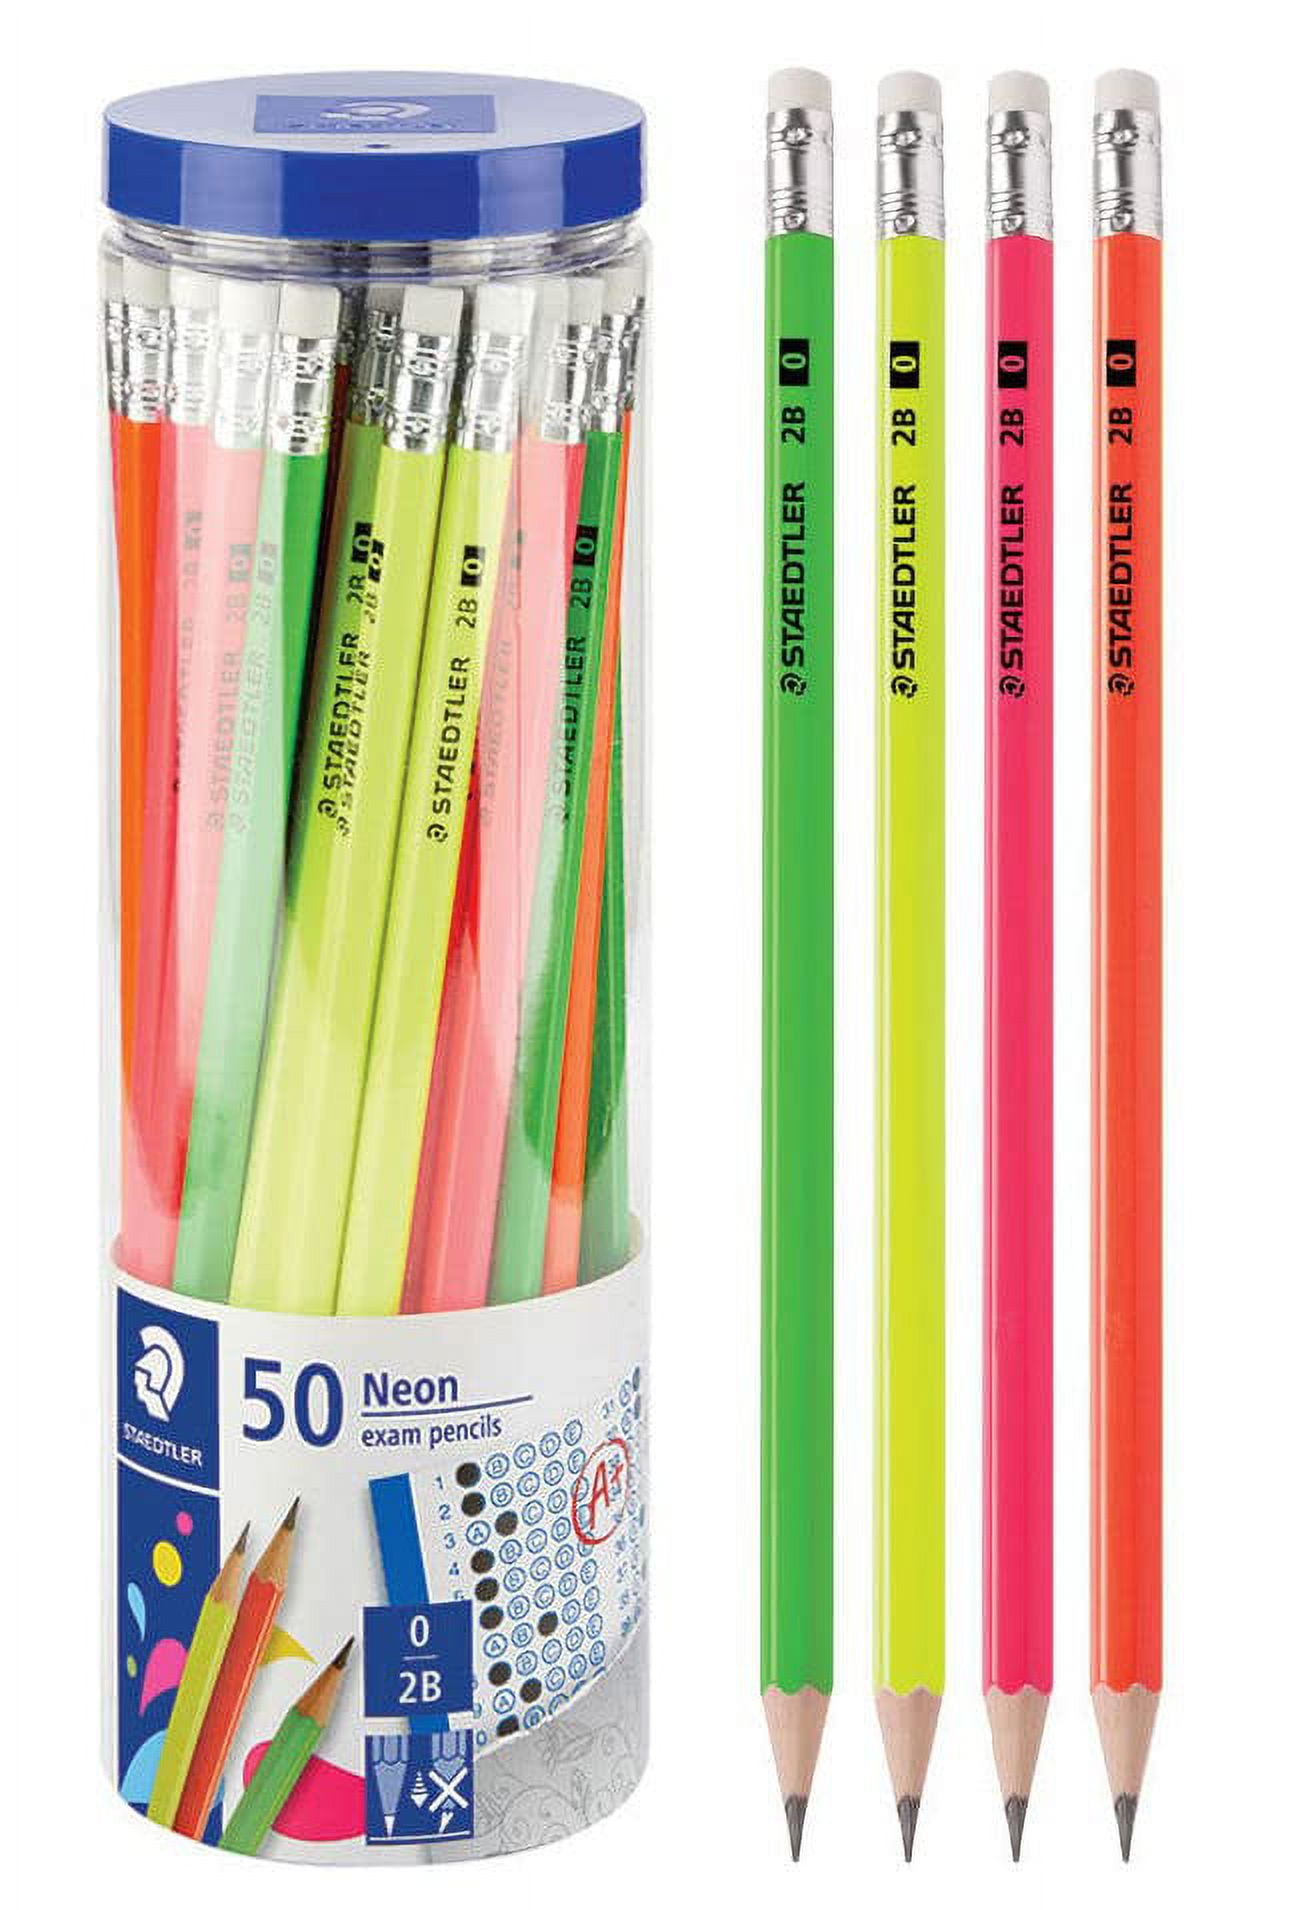 Staedtler Pencil and Crayon Sharpener